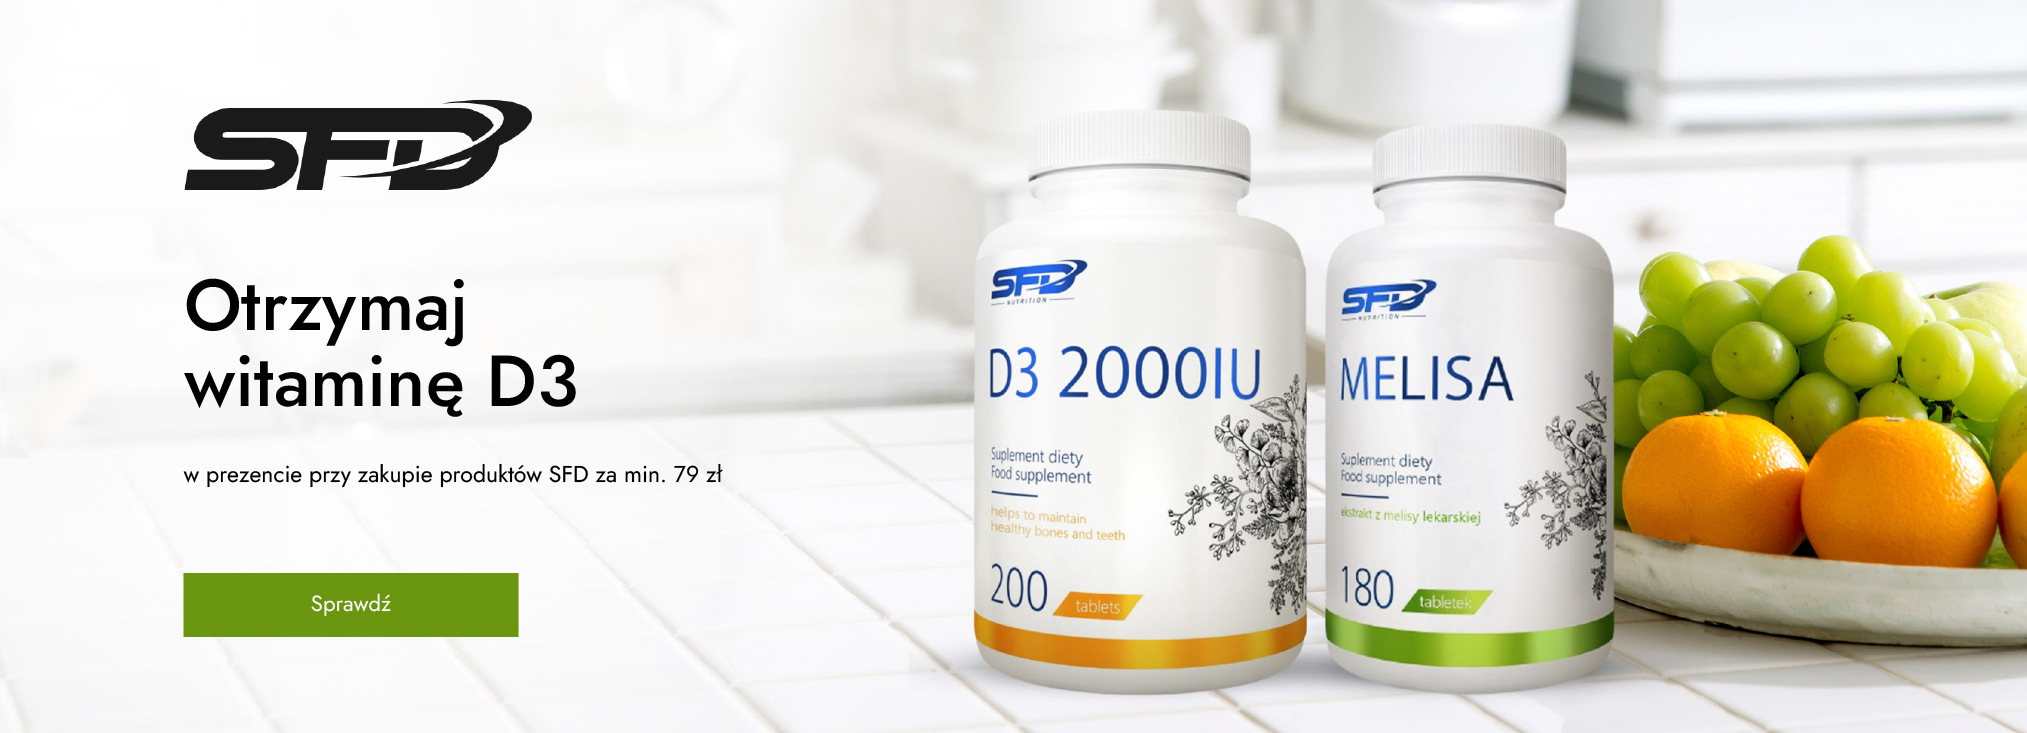 SFD_dietary supplements